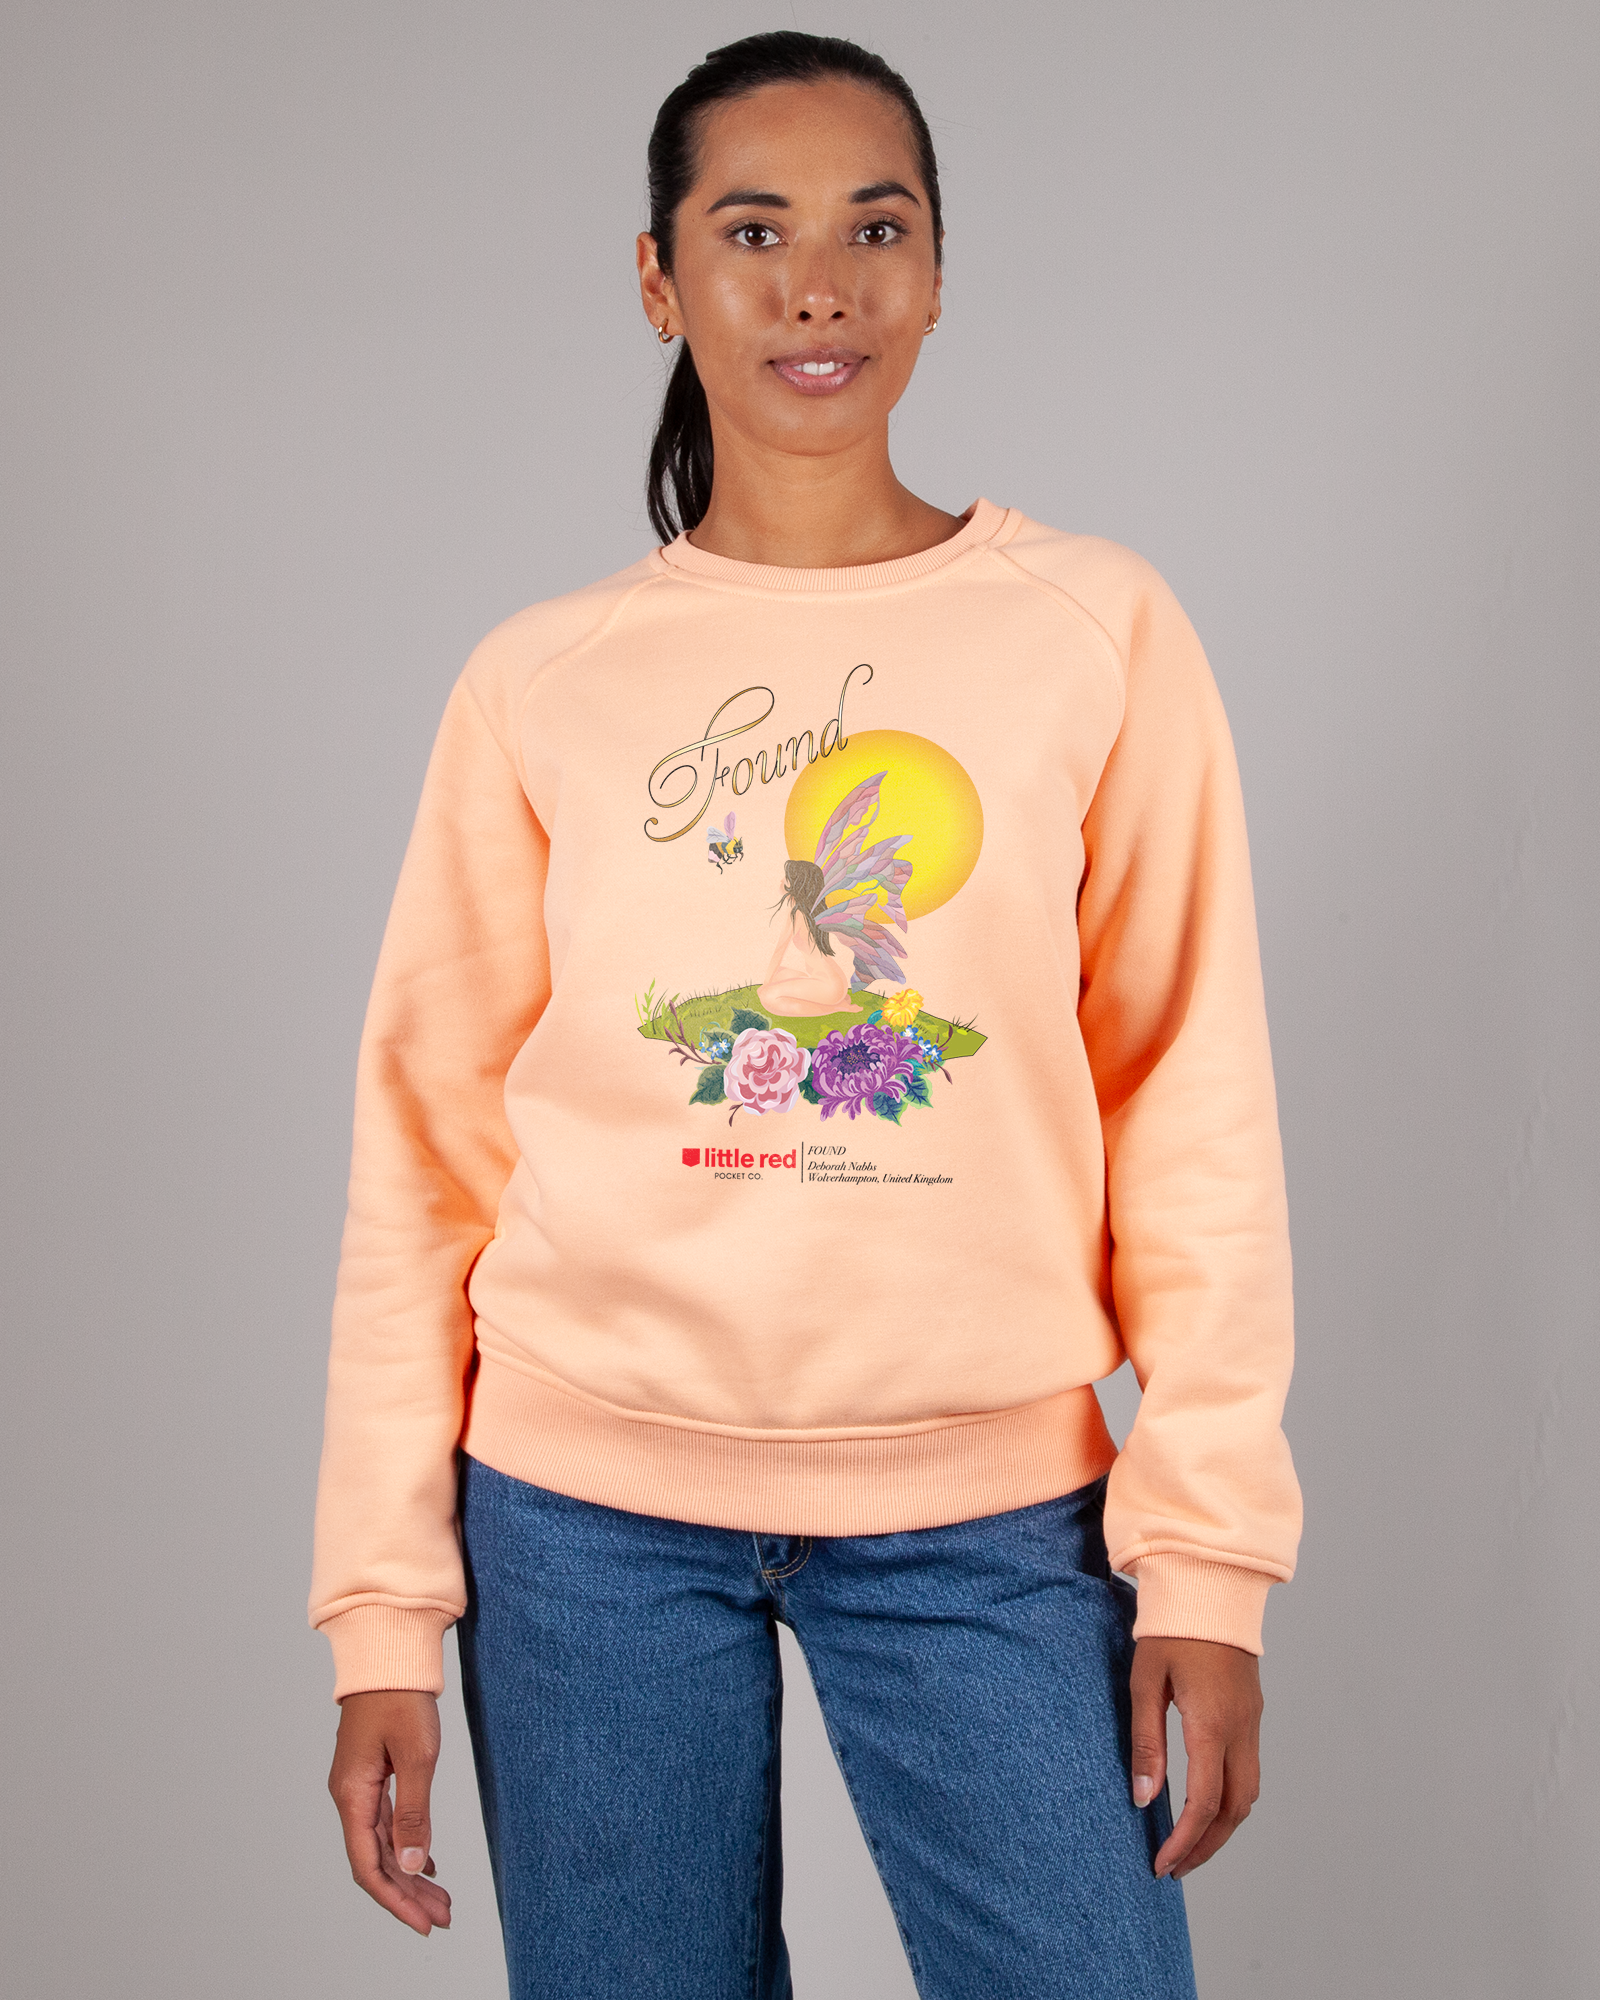 "Found" Female Crewneck Sweater